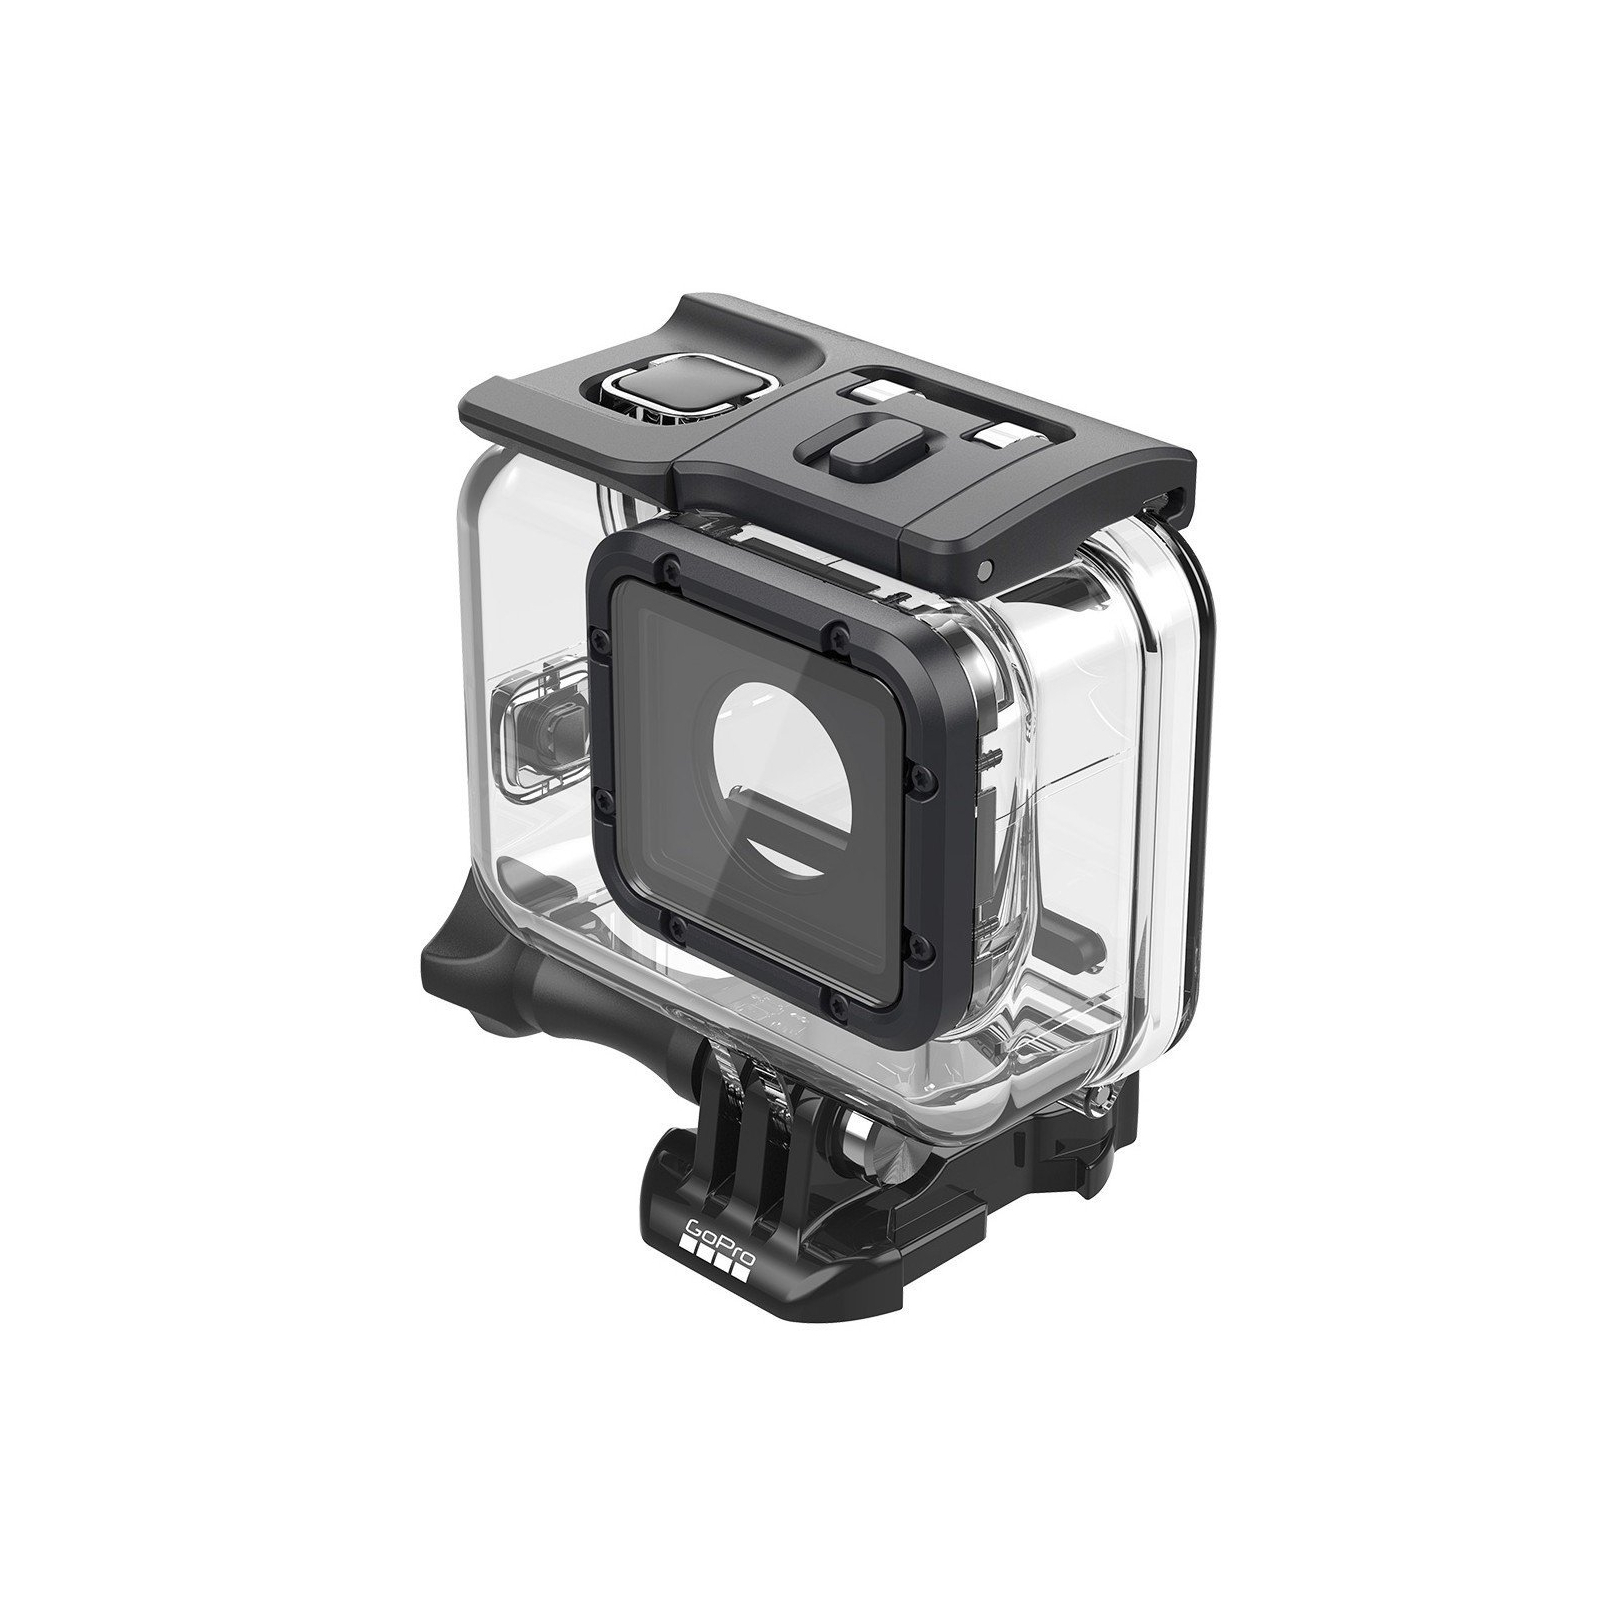 Аксесуар до екшн-камер GoPro Box Armageddon (Protective Housing HERO5/6/7 Black) (AADIV-001)